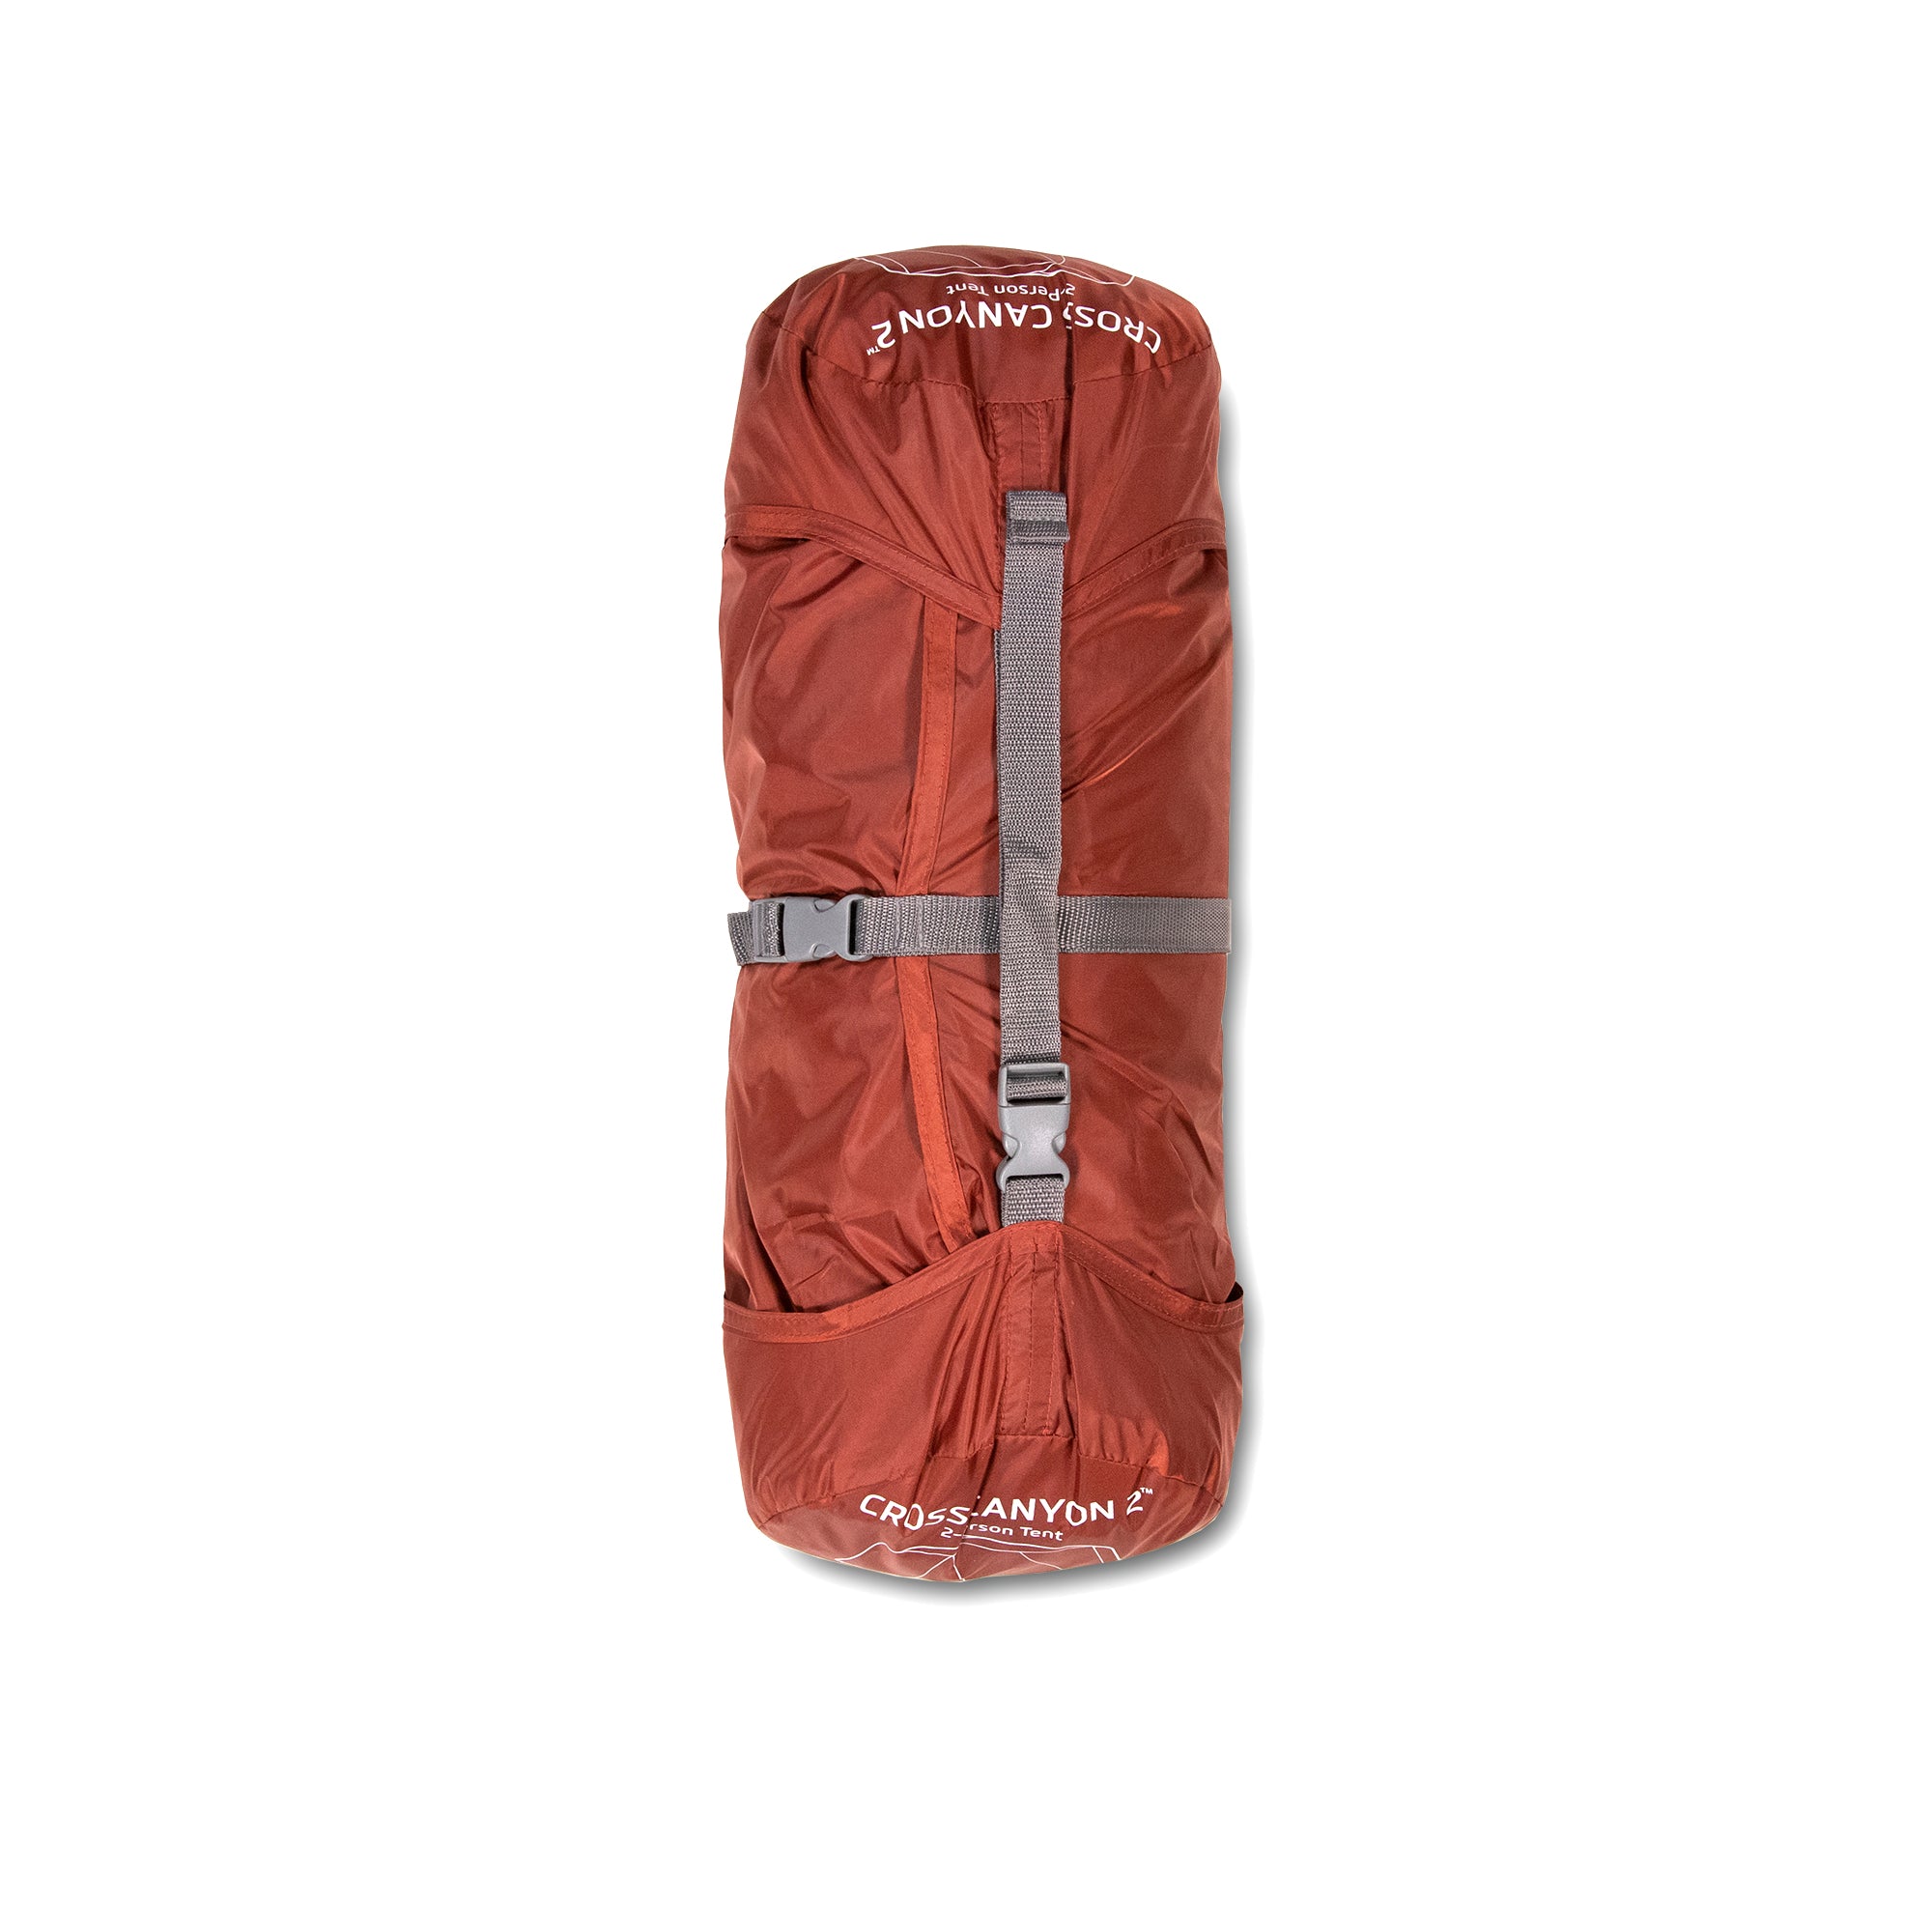 Cross Canyon Tent, 2 Person Orange/Gray, Storage Bag